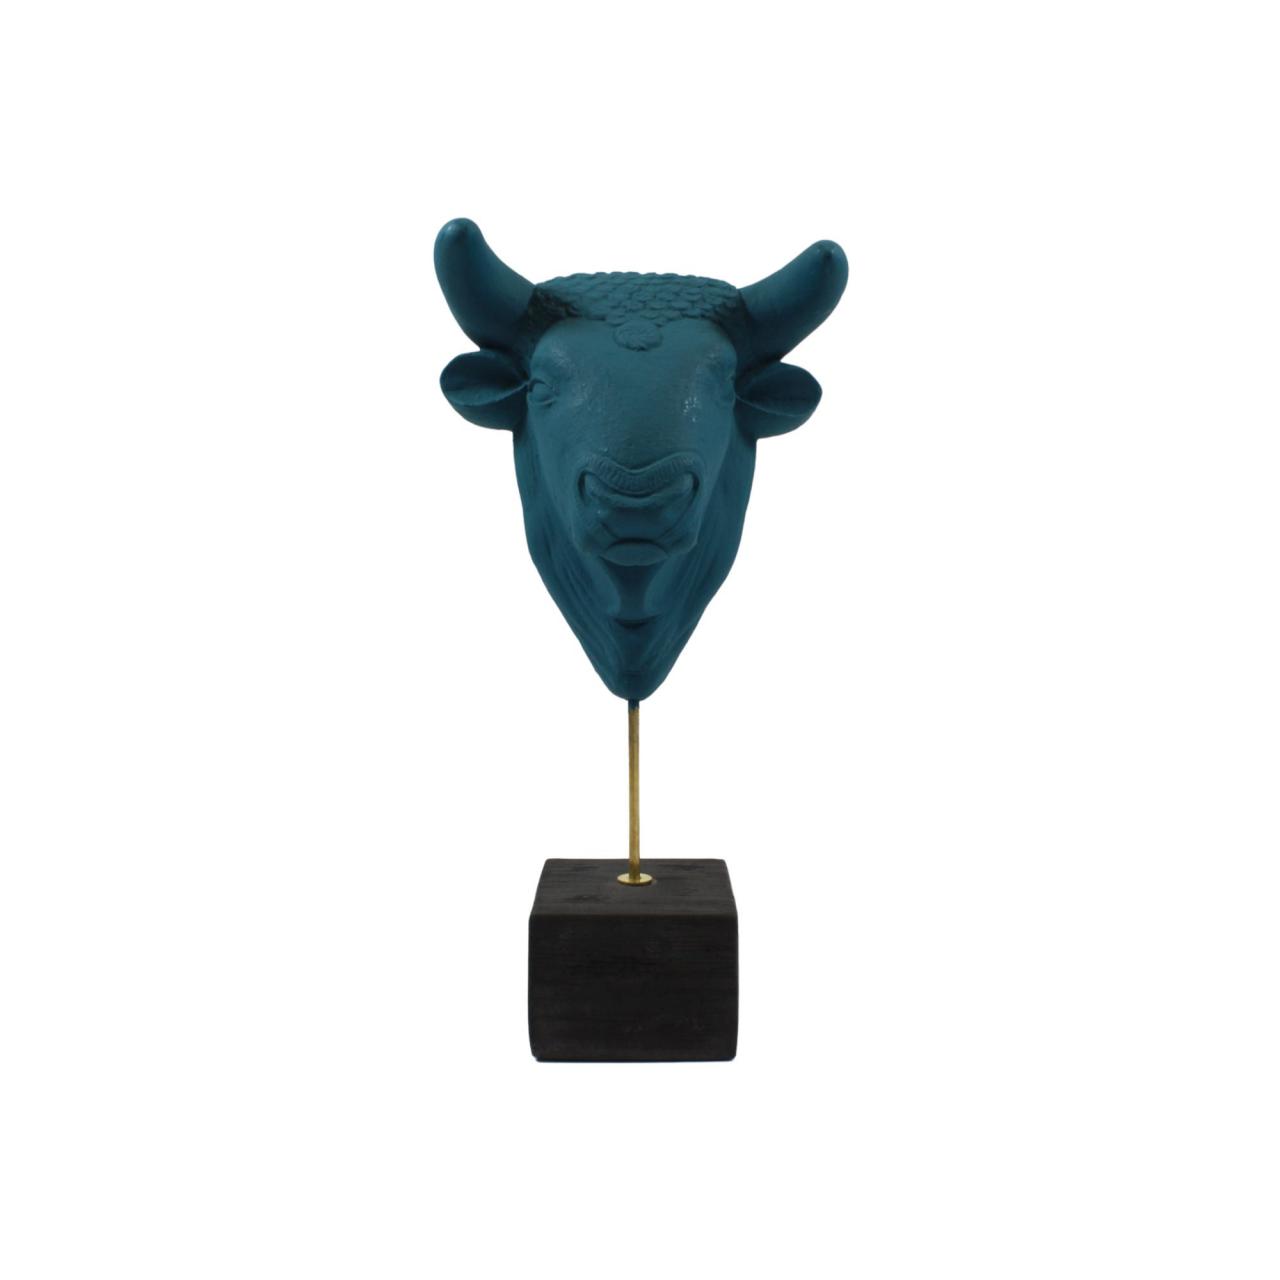 Minotaur Statue Bust Head Plaster Sculpture - Petrol Color